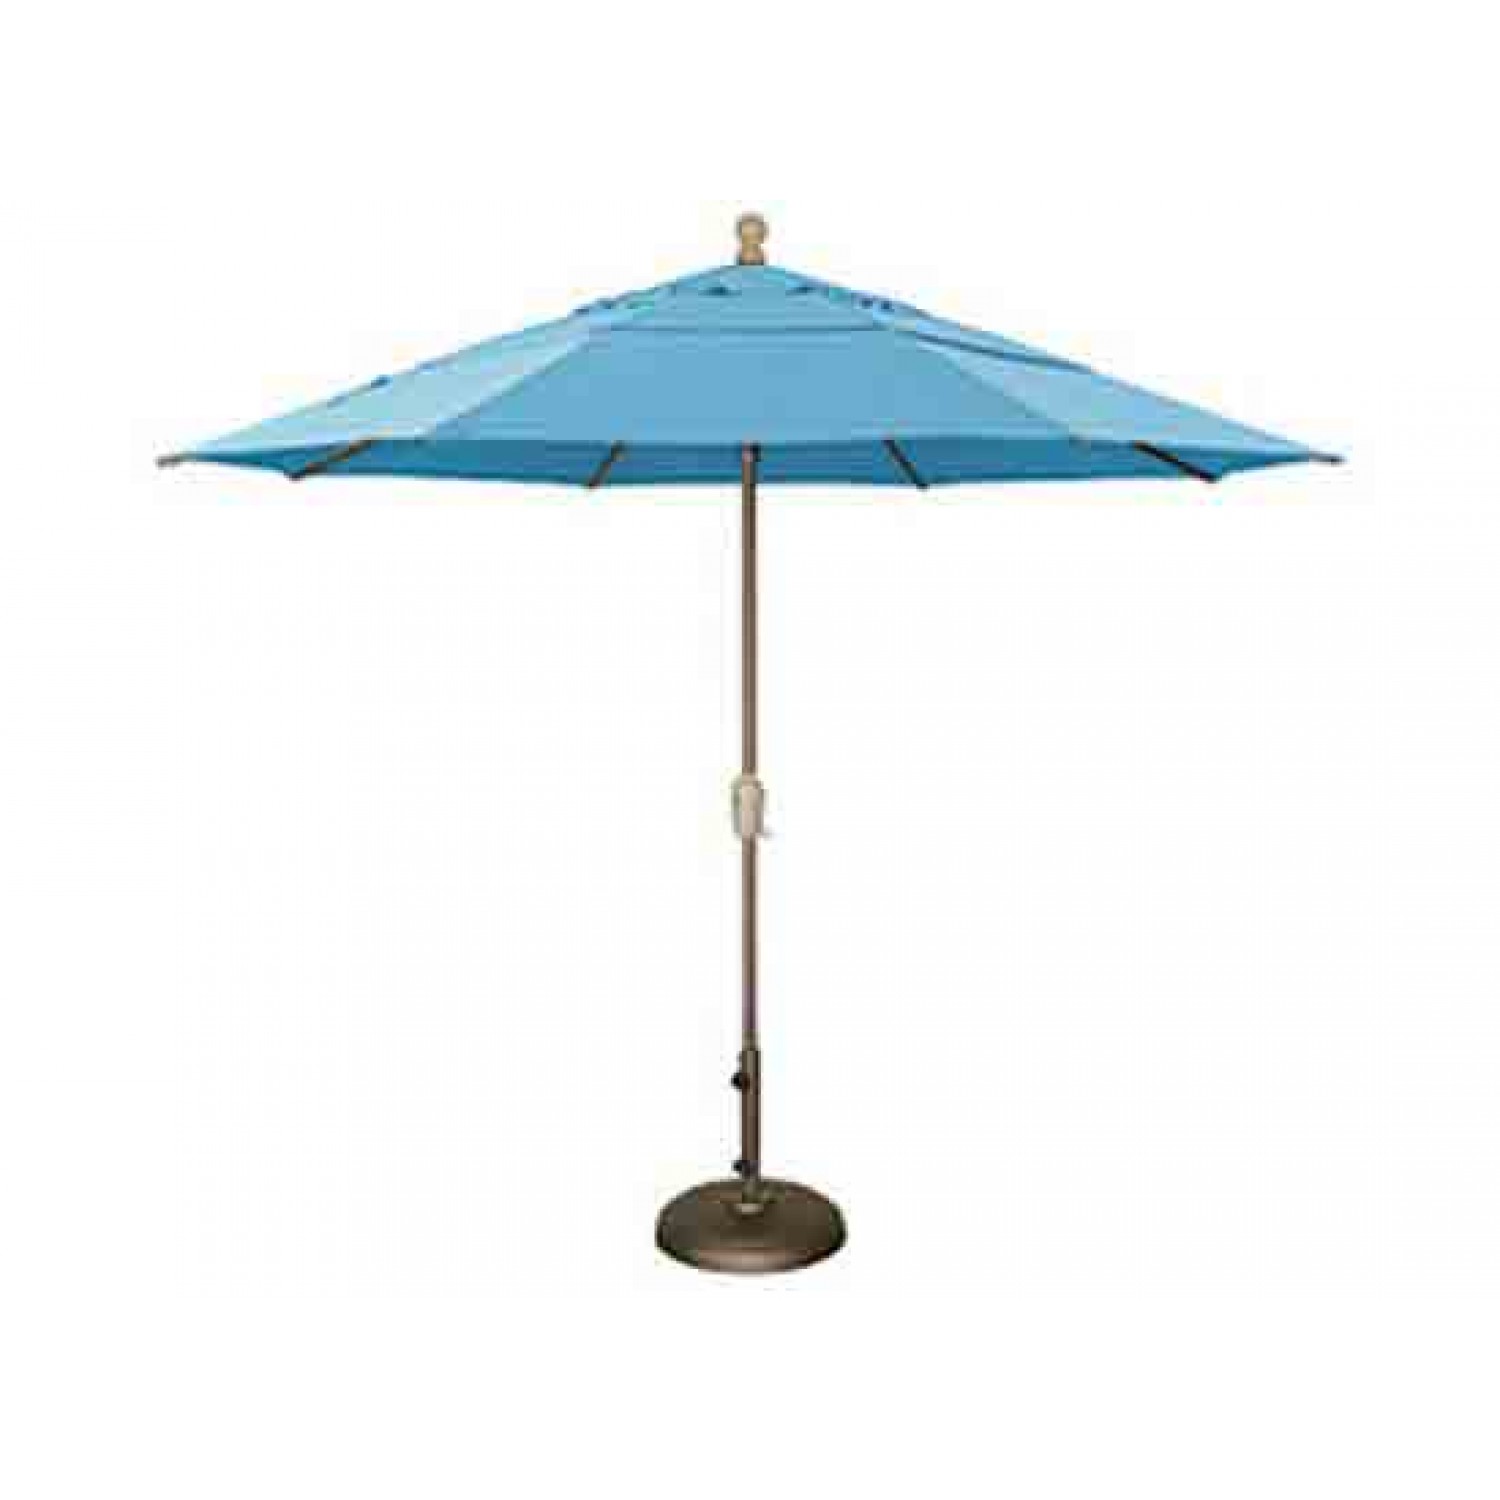 11' Round Auto Tilt Umbrella